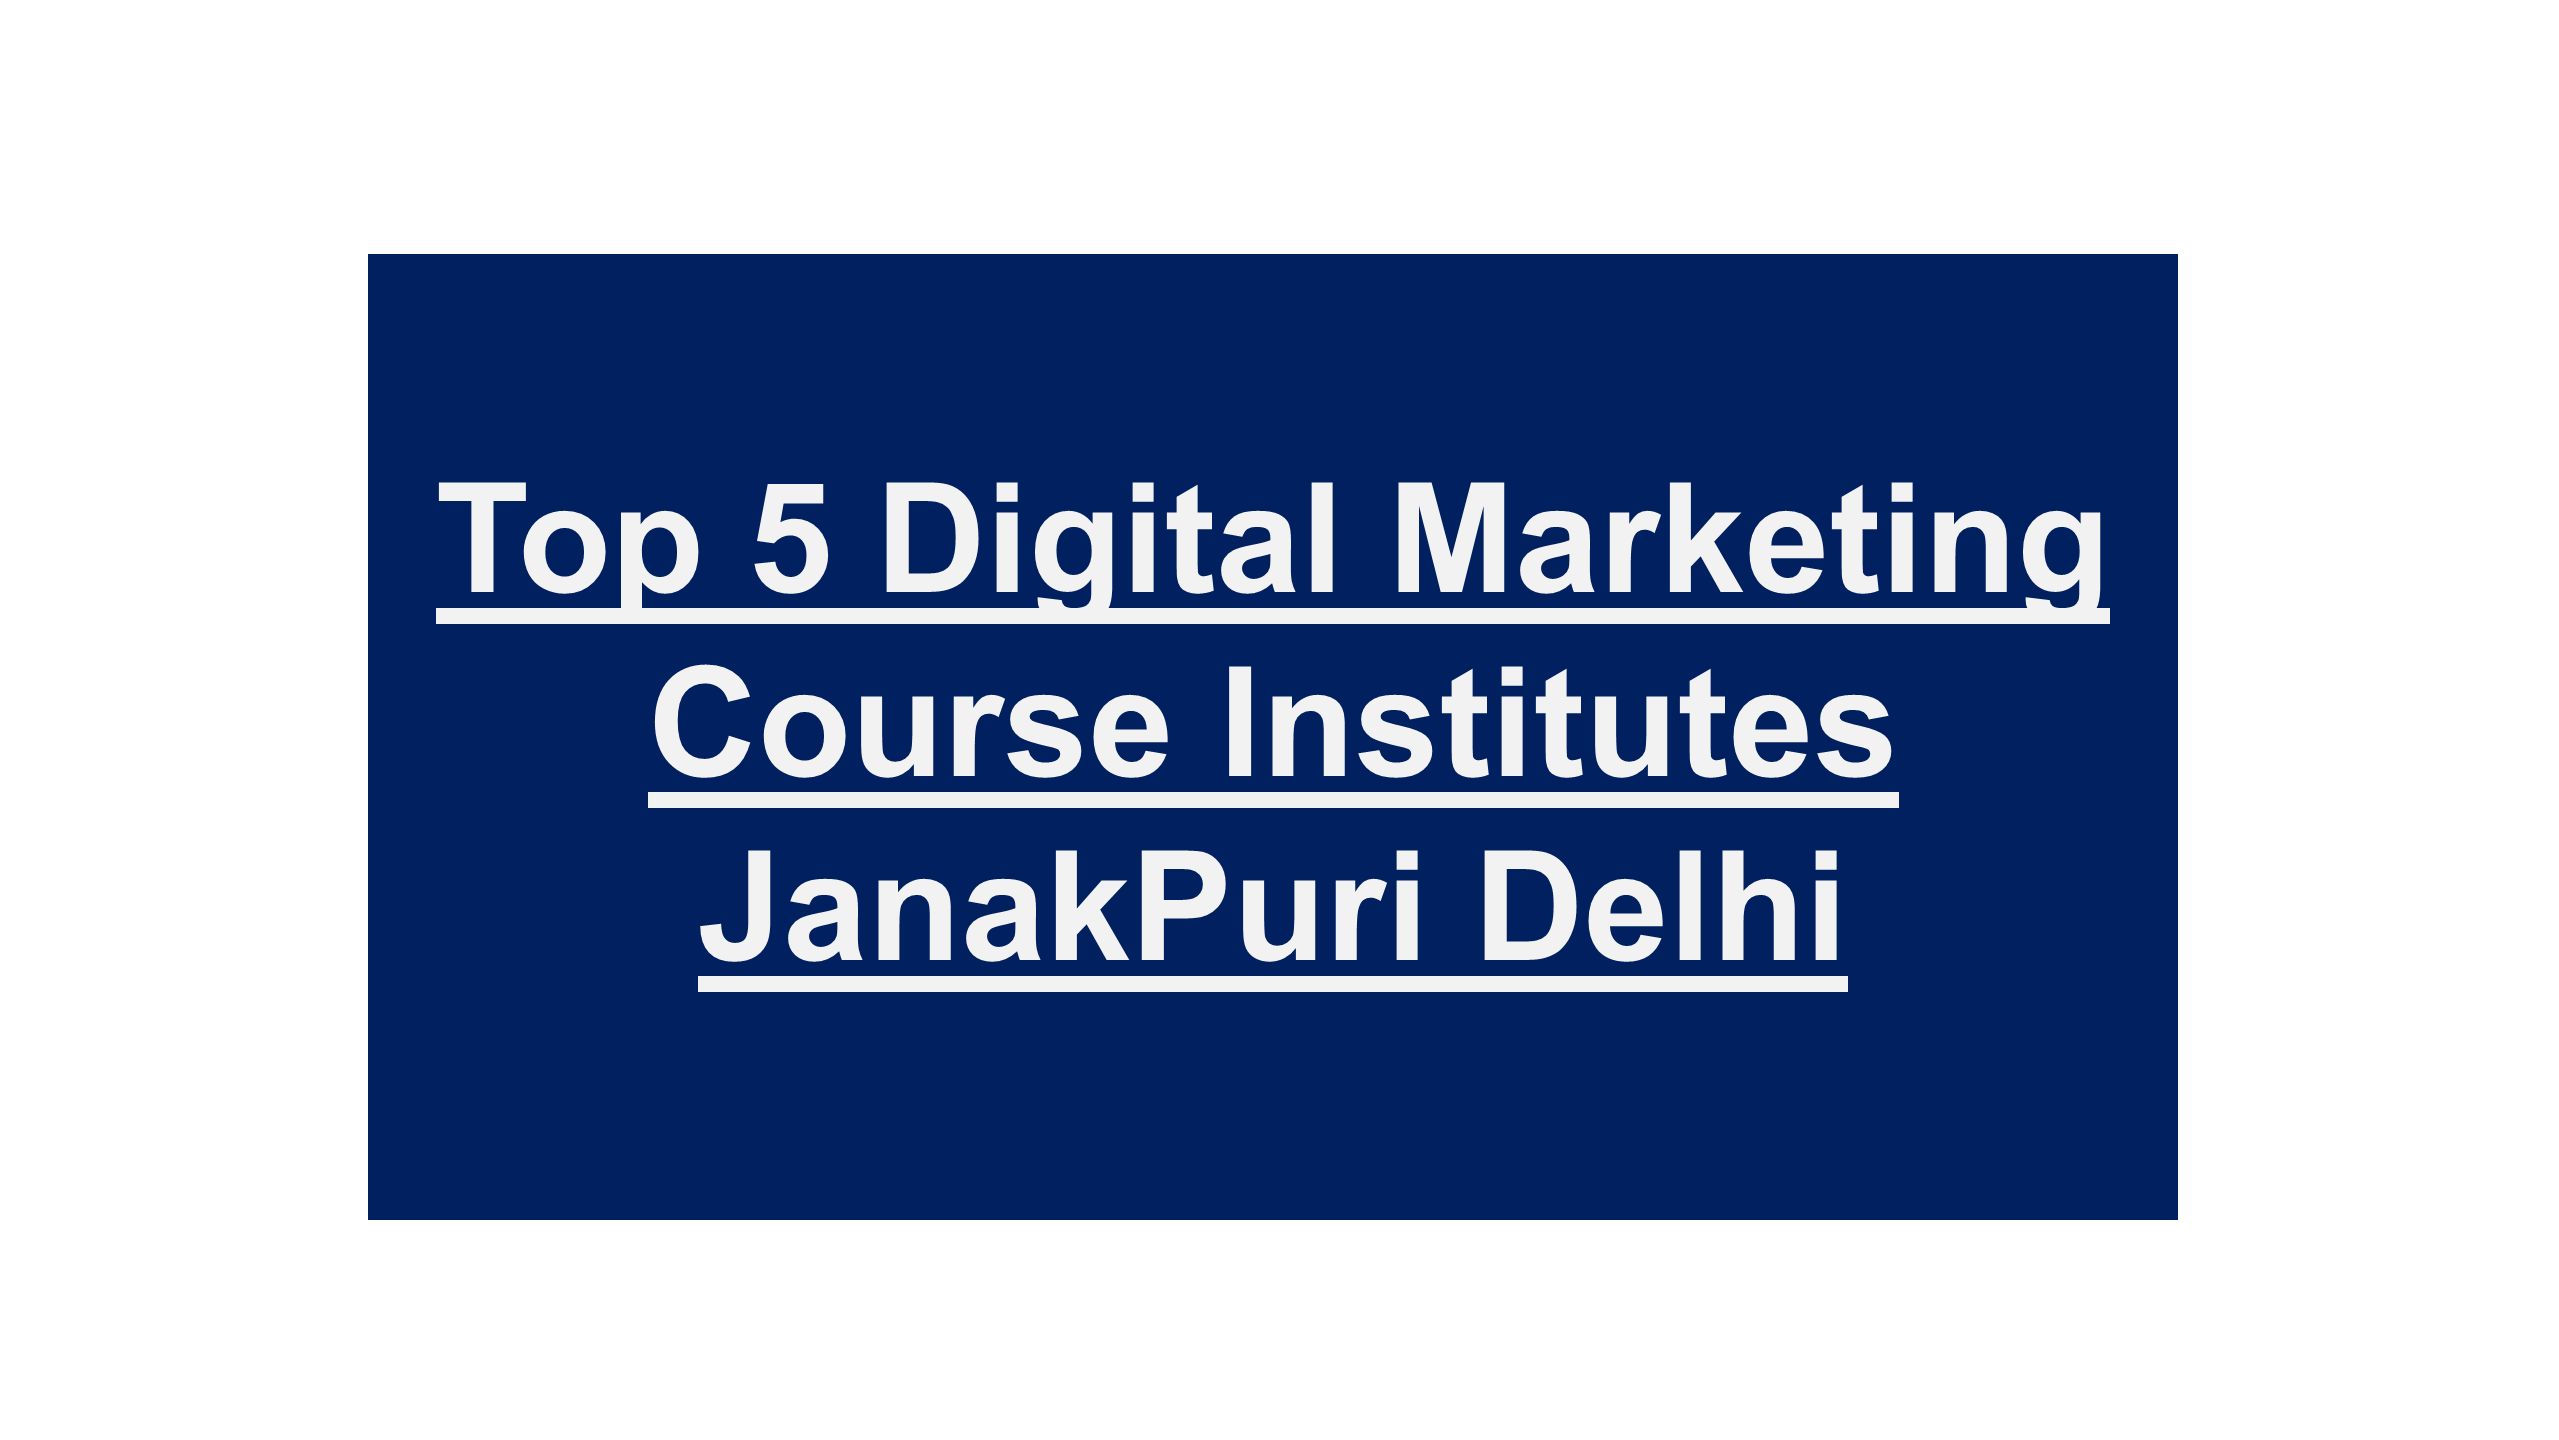 Top 5 Digital Marketing Course Institutes JanakPuri Delhi